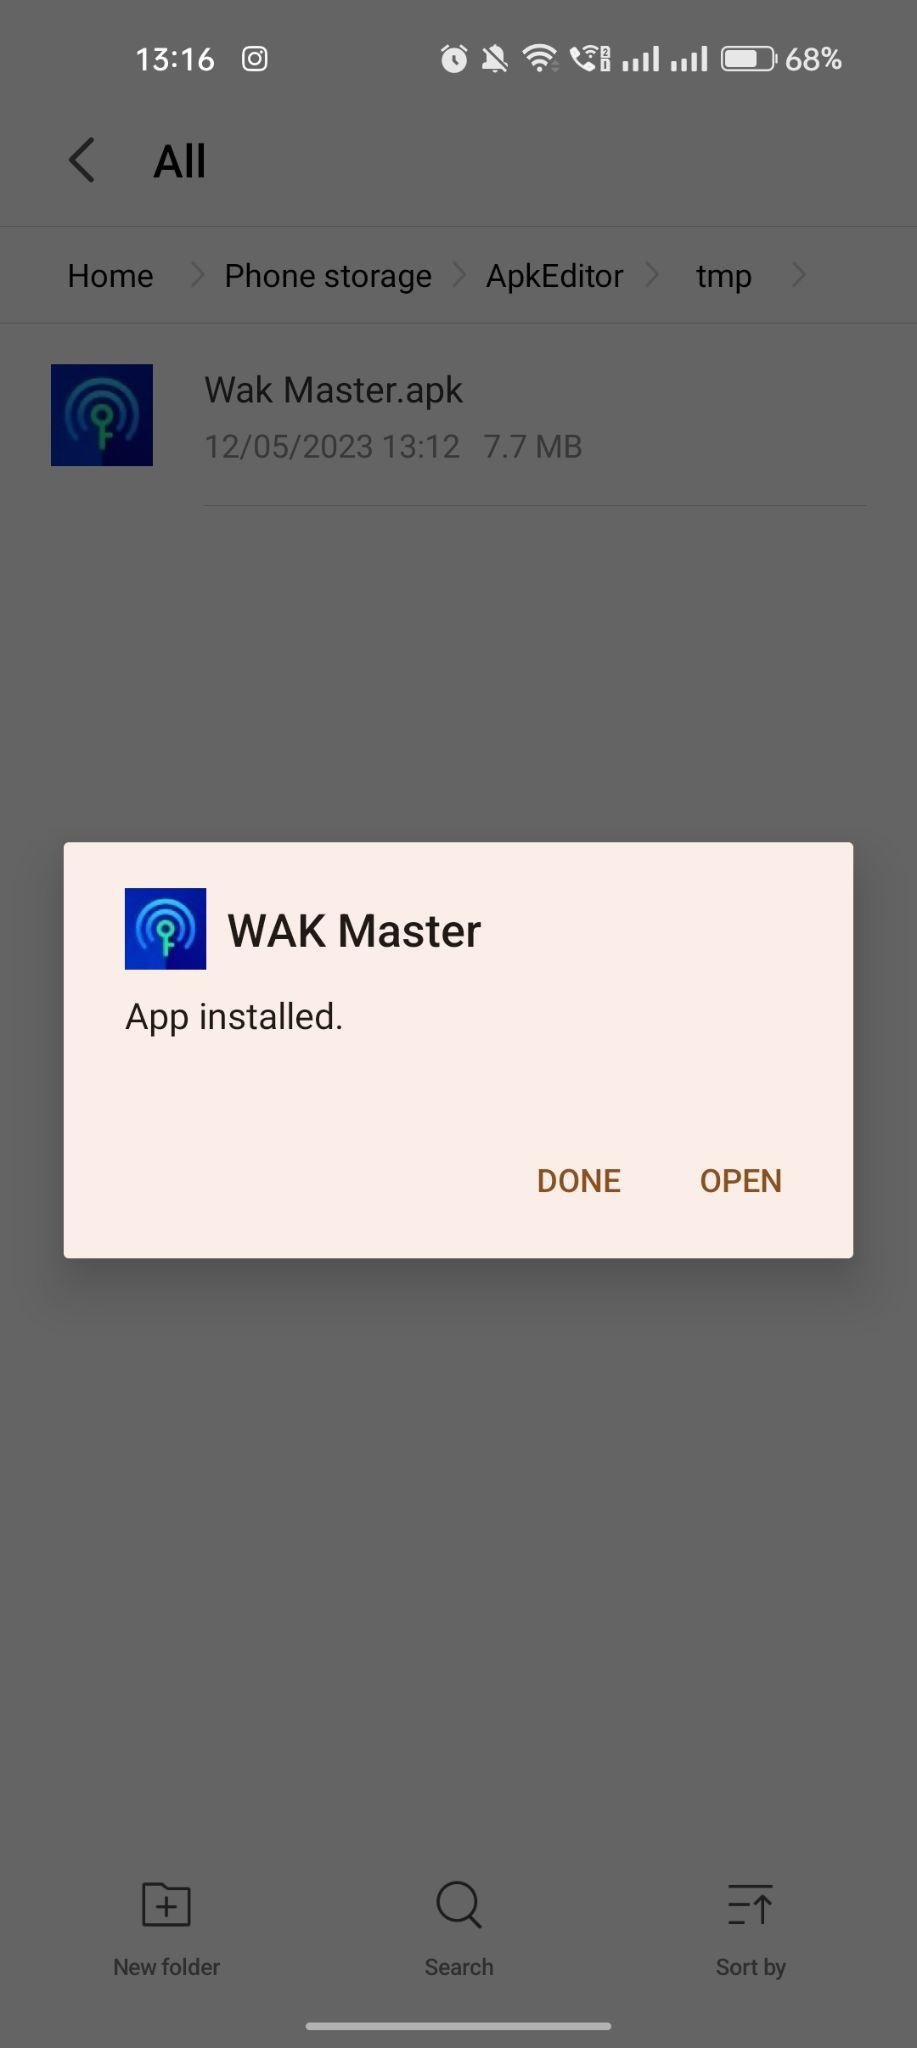 Wak Master apk installed